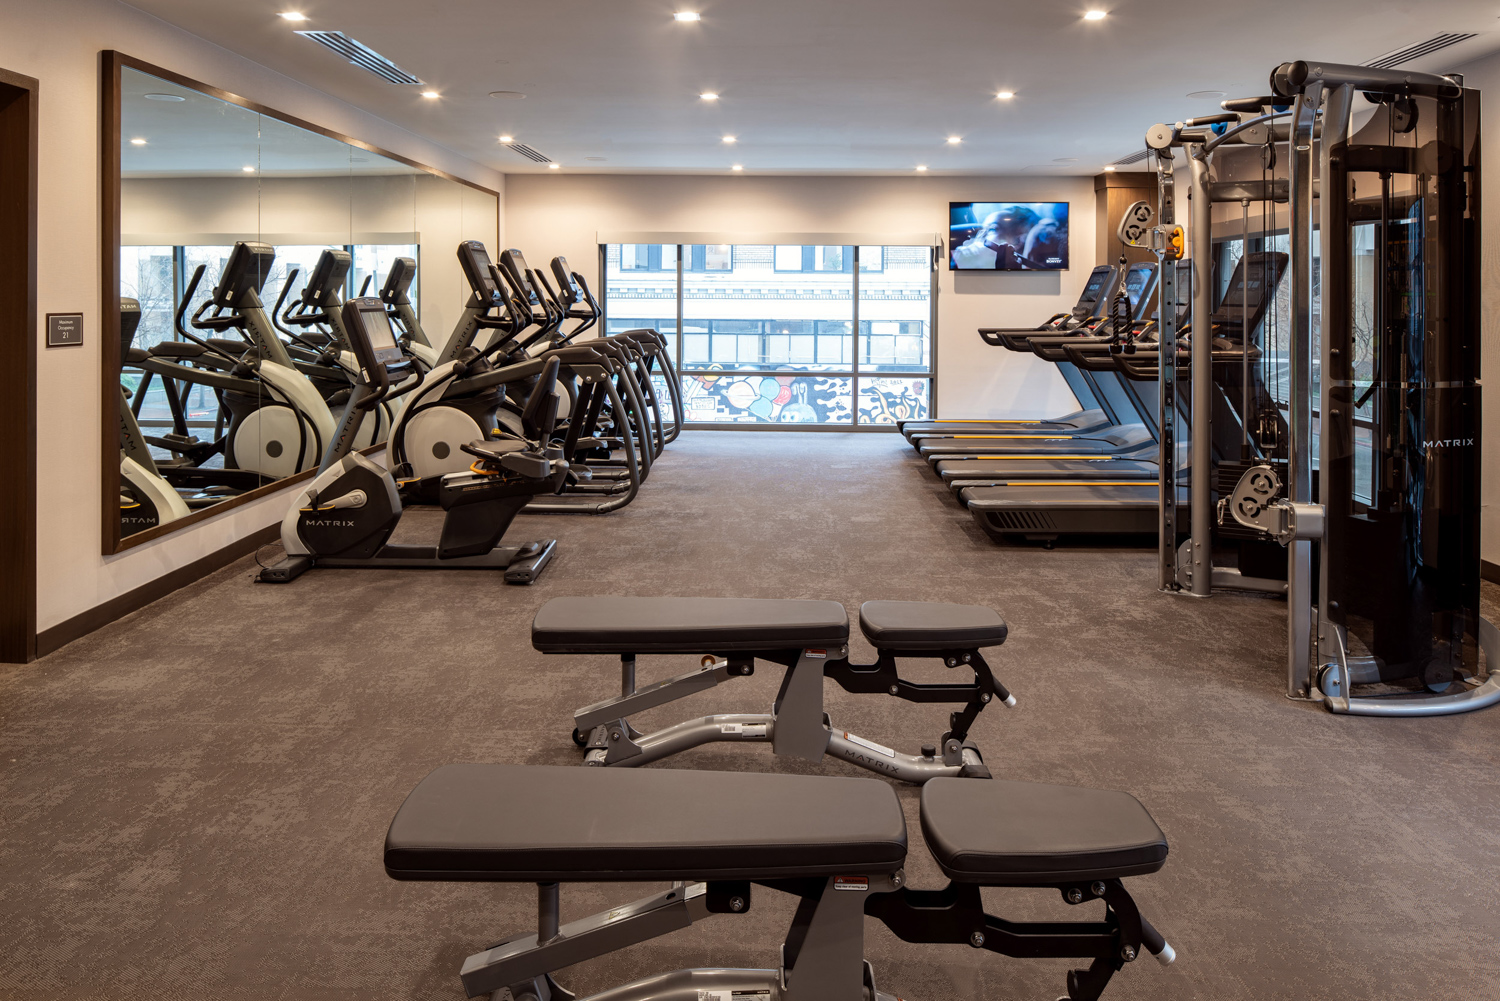 1431 Jefferson Street fitness center, image courtesy project team